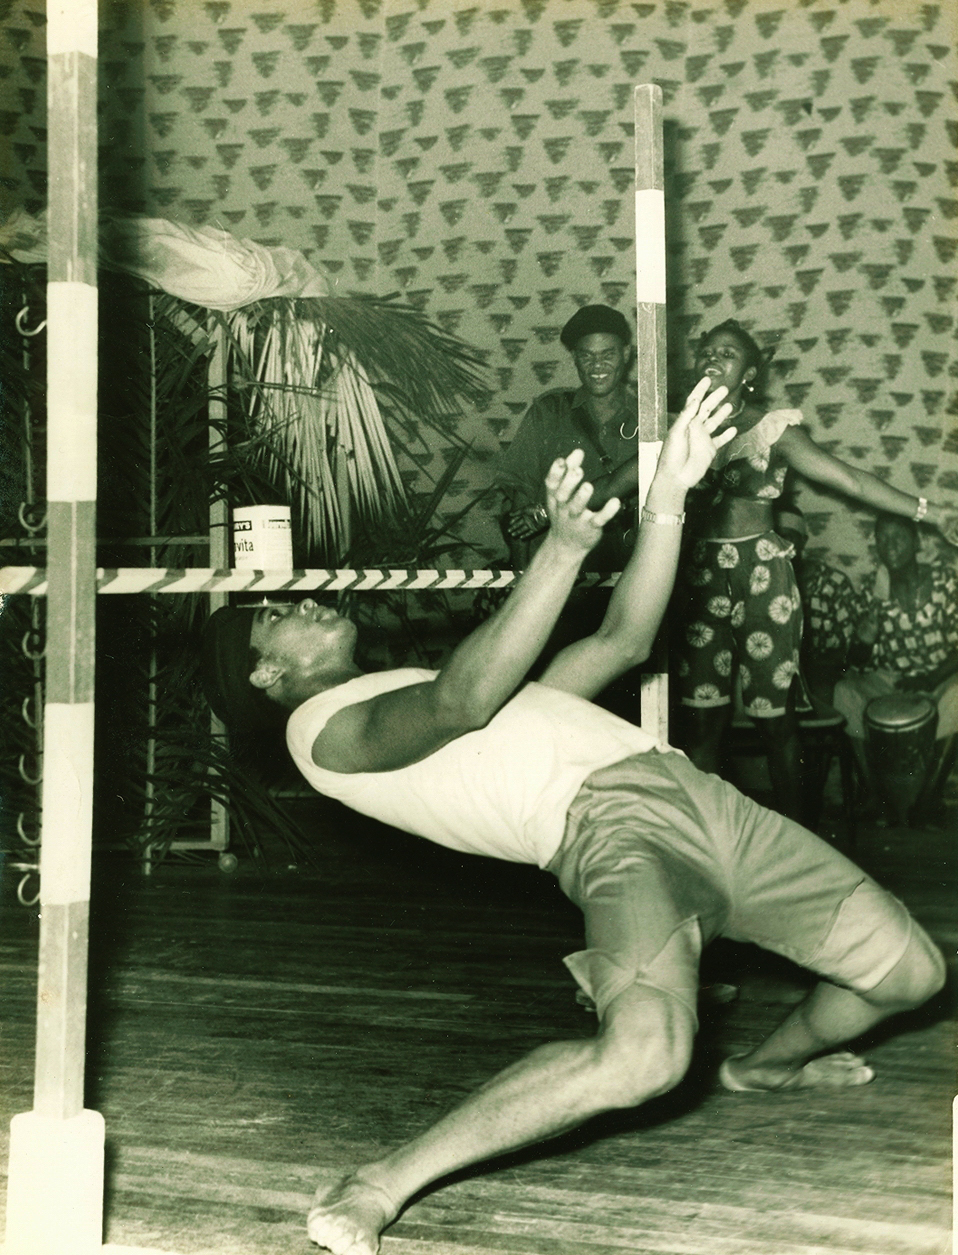 David Ogunde, the Limbo Dancer!